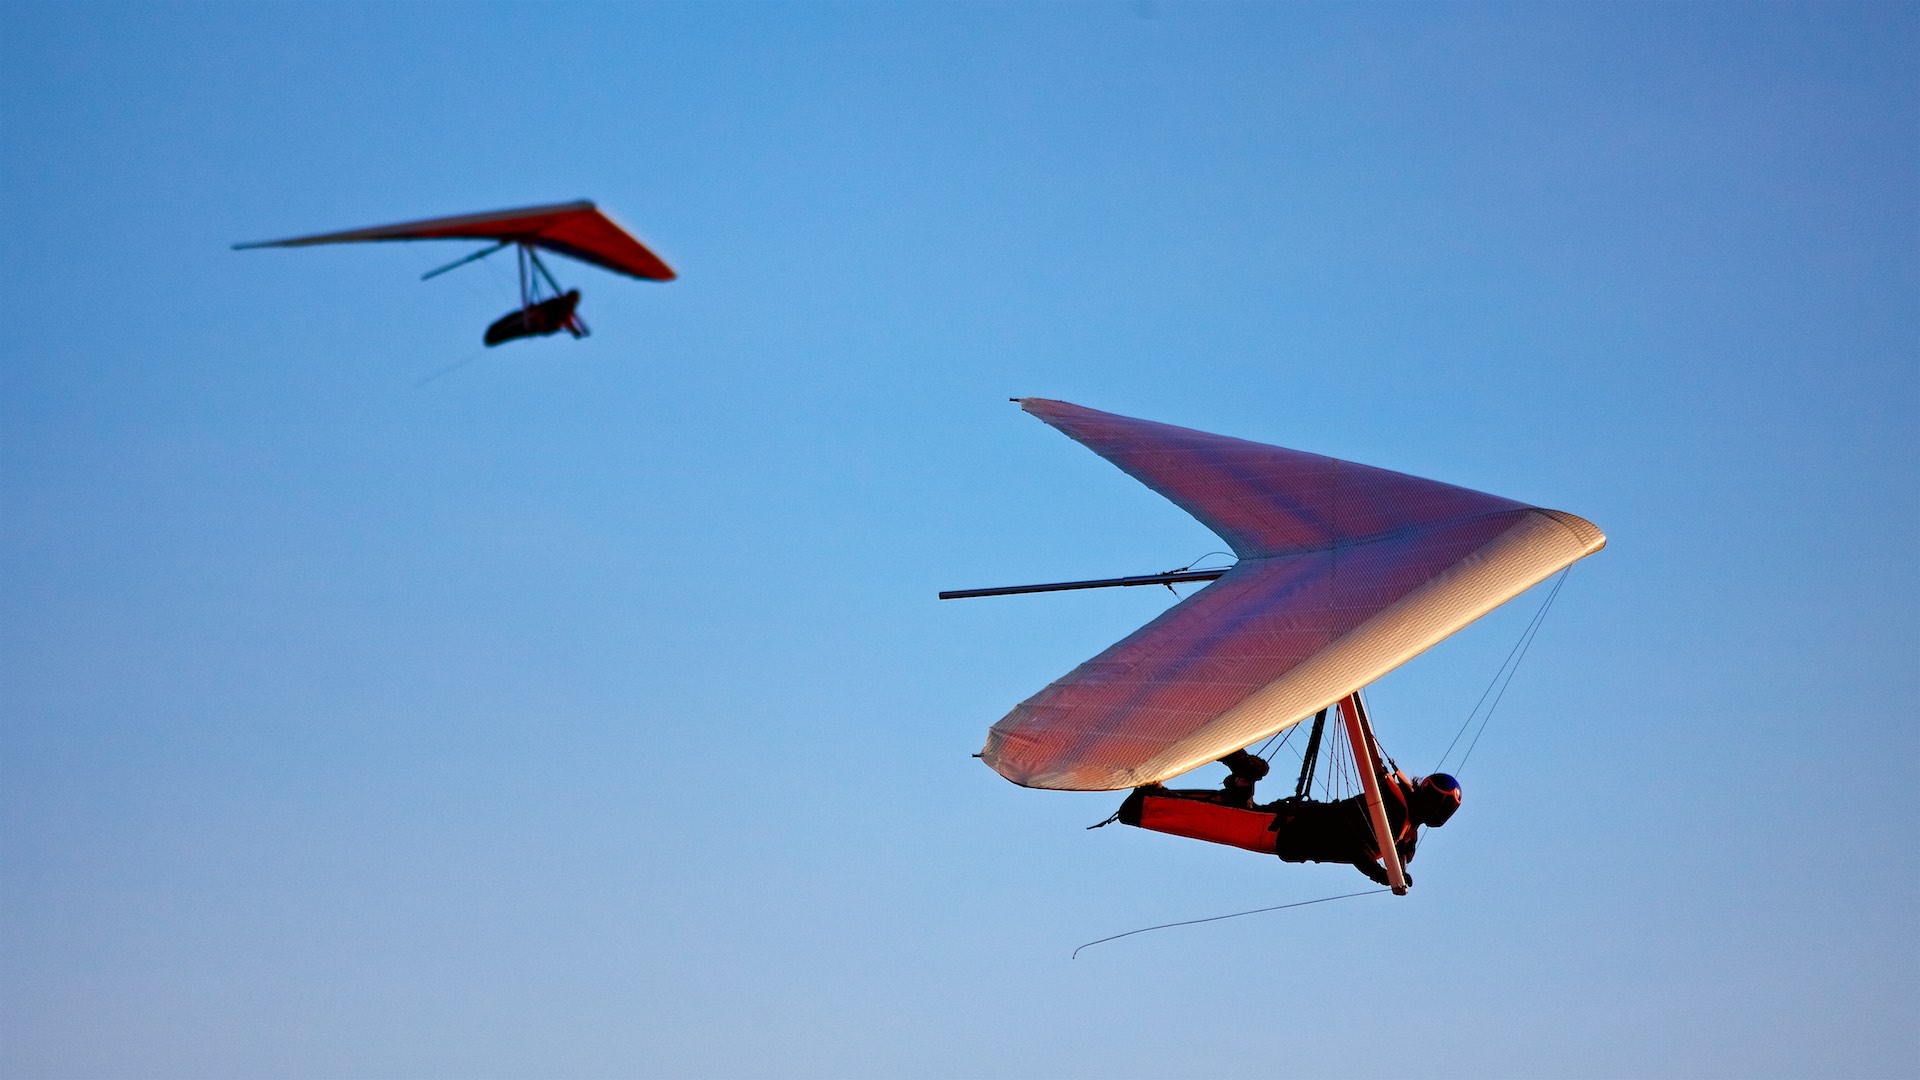 Hang Gliding at Sunset, Fort Funston